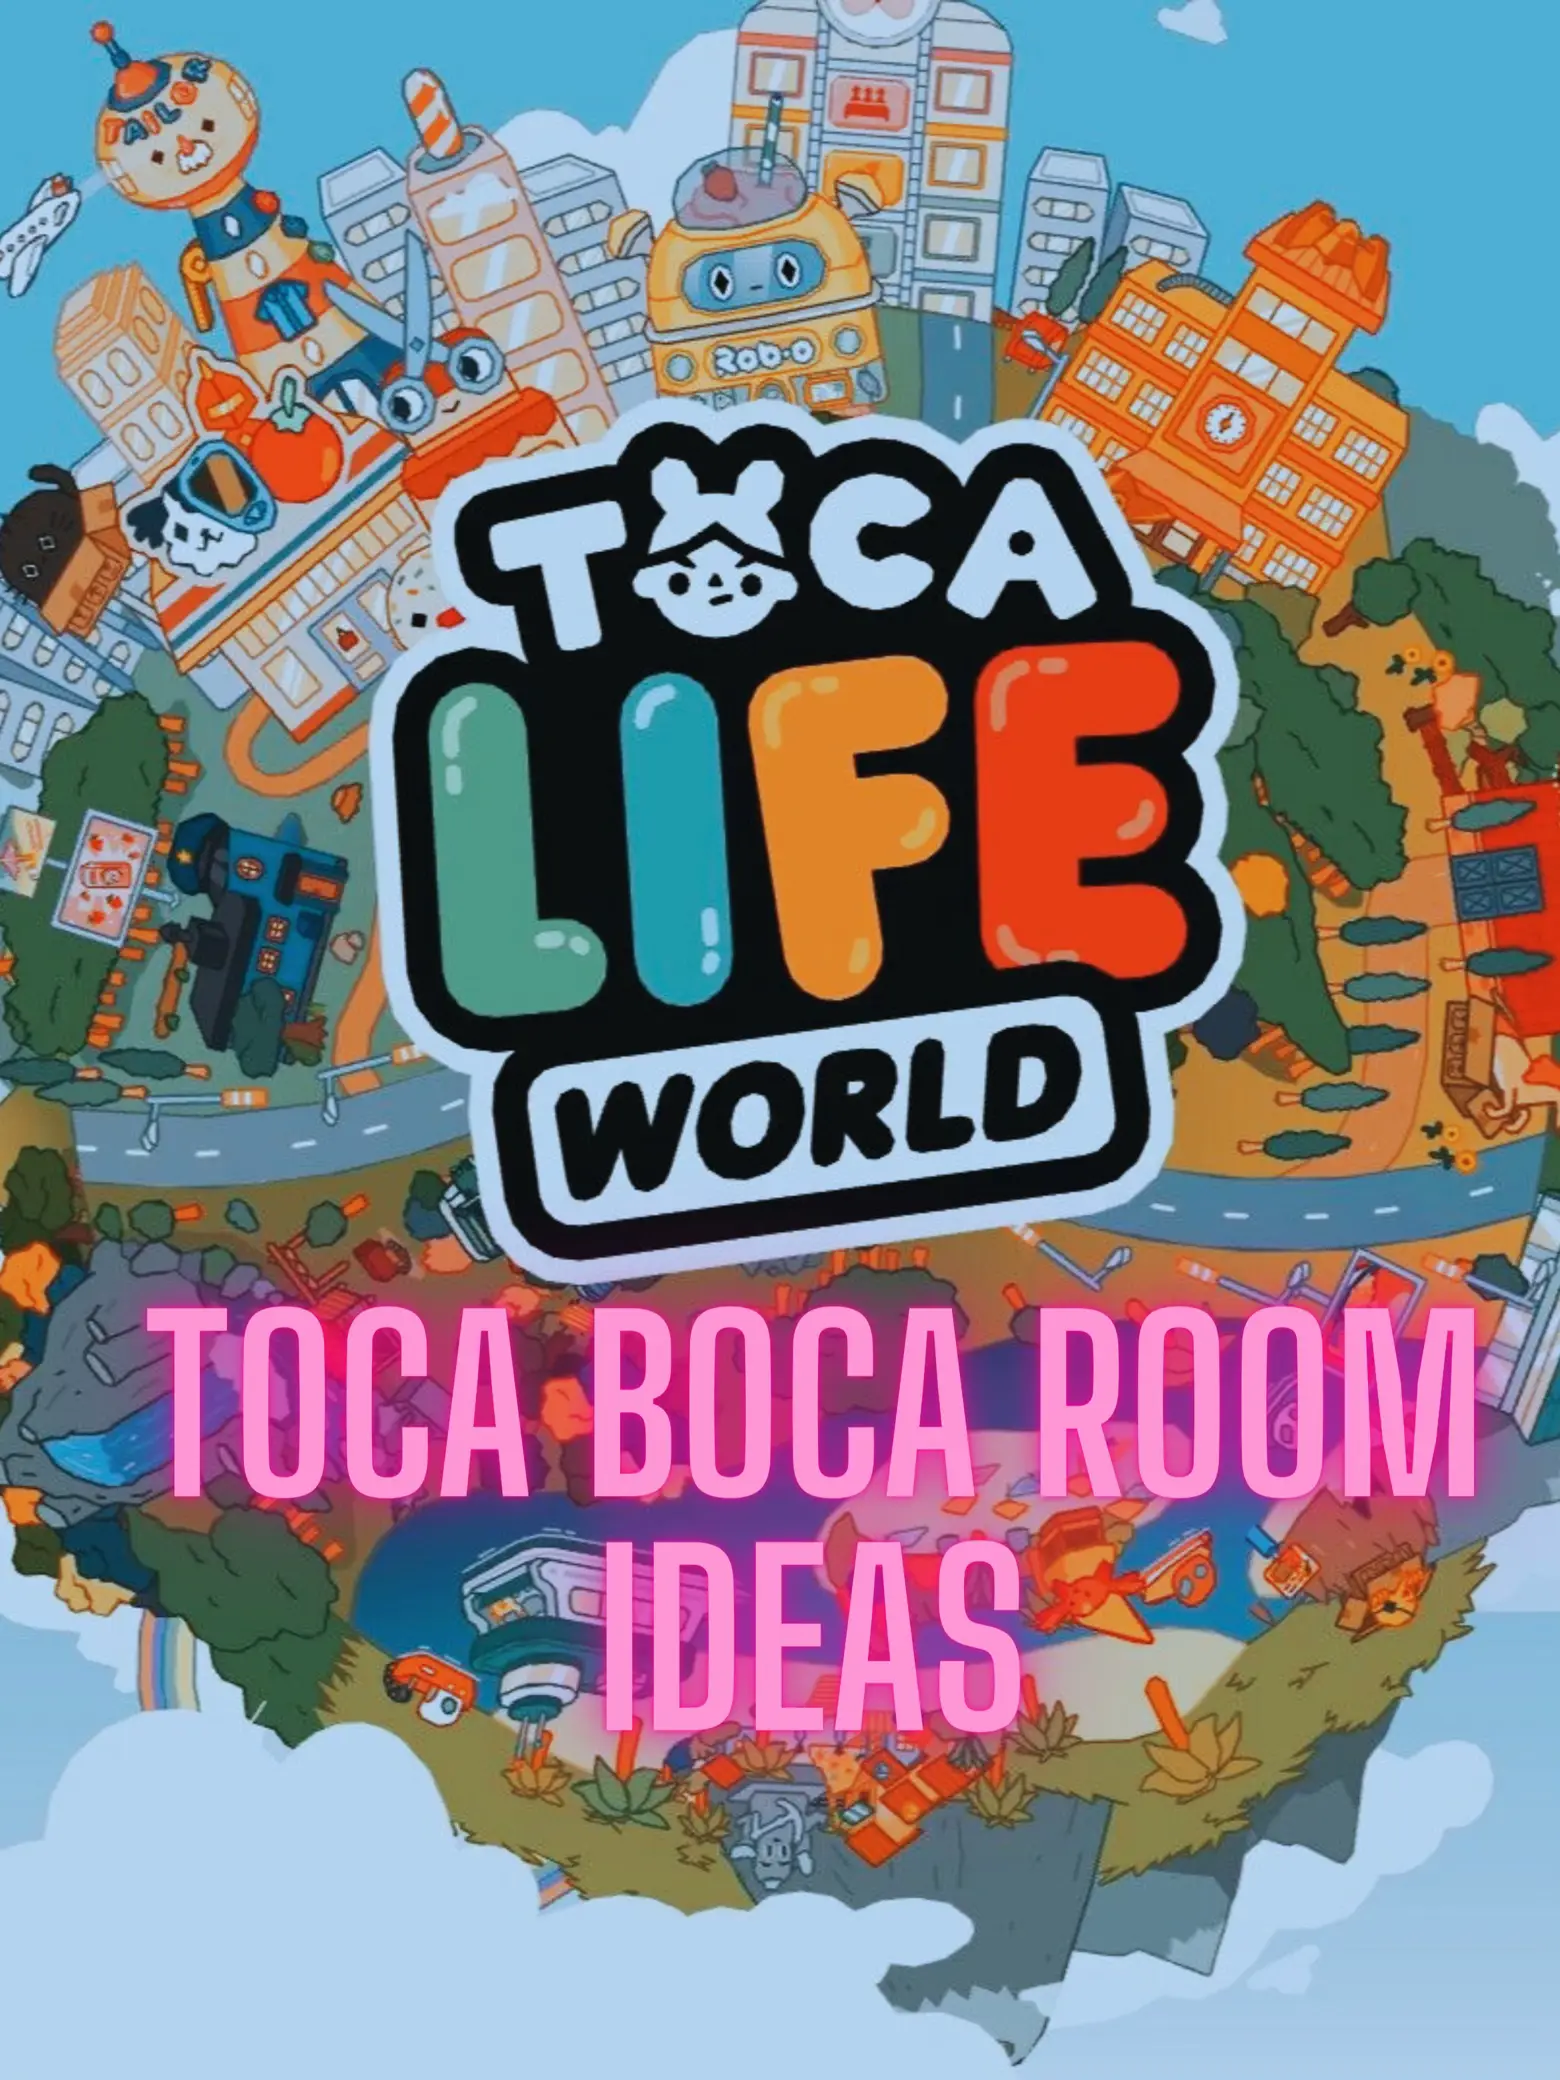 What's Driving Toca Boca's 100 Million Downloads?